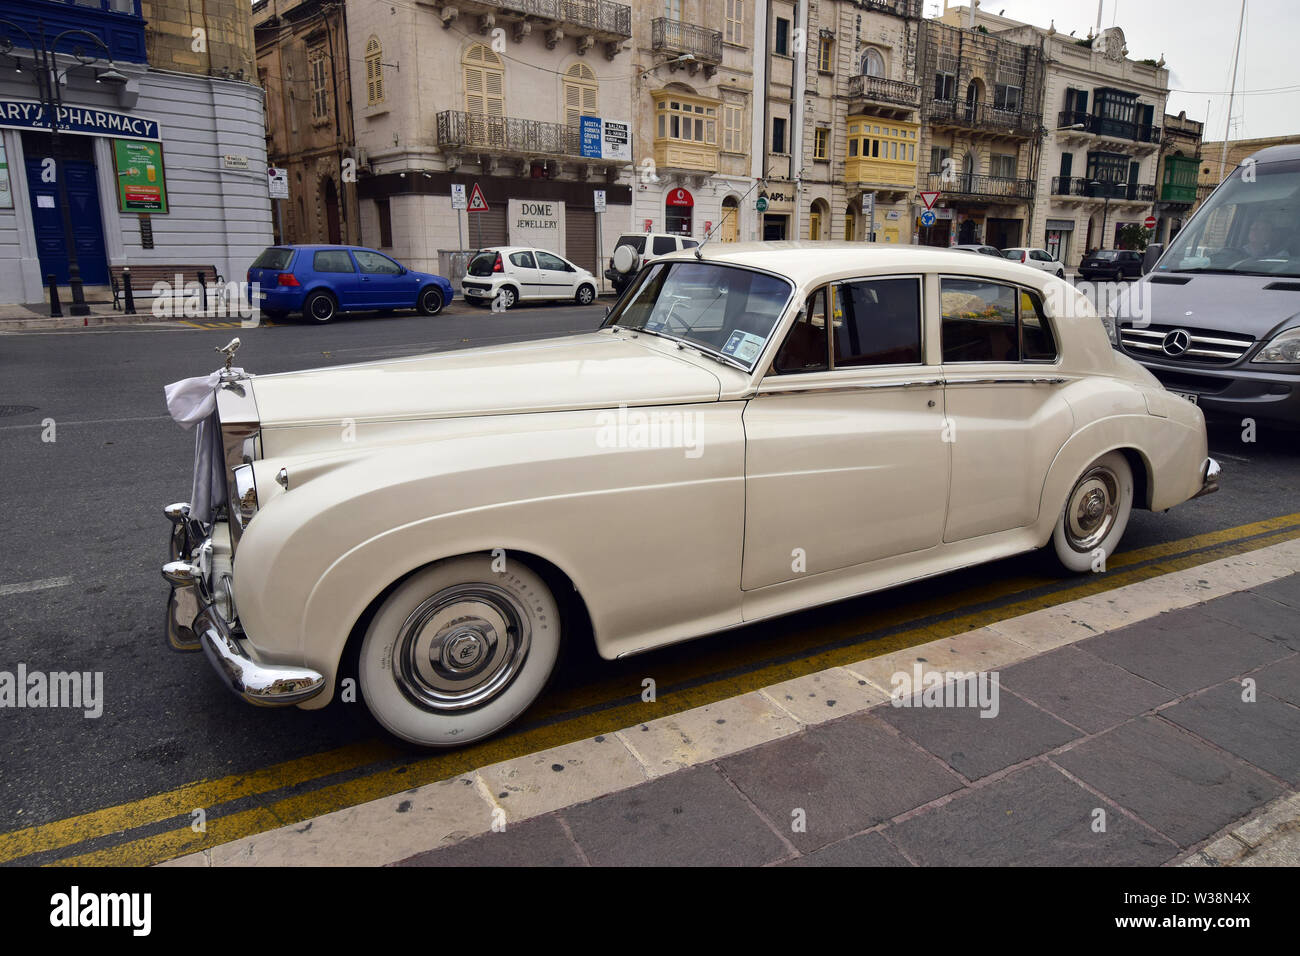 Rolls Royce car, Mosta, Malta, Europe Stock Photo - Alamy